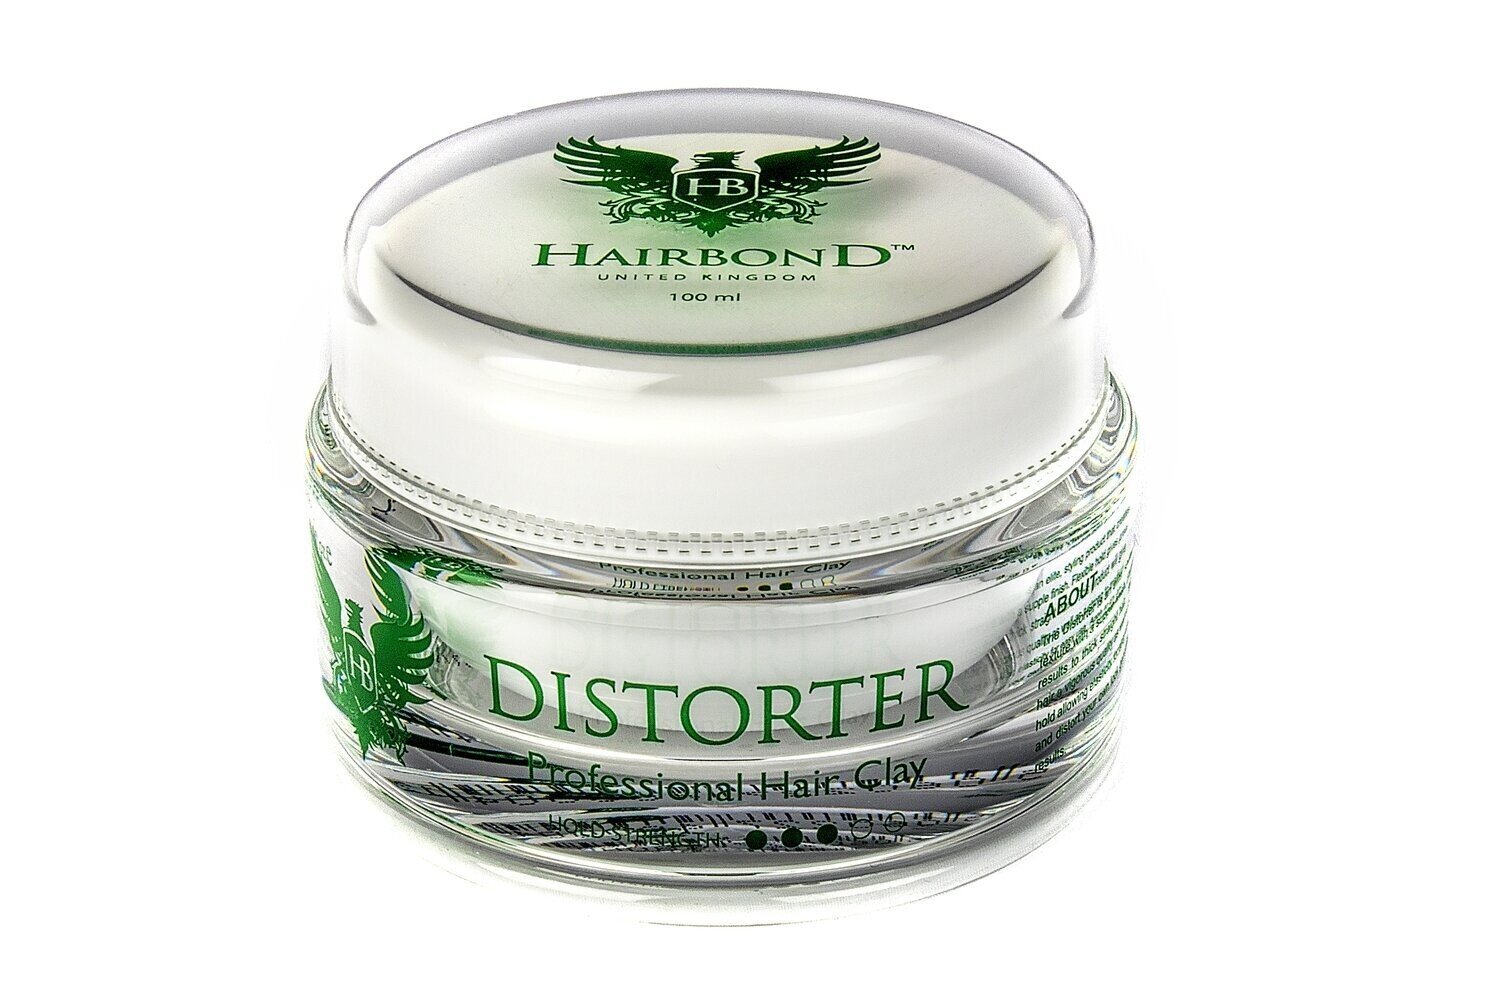 Hairbond® Distorter Professional Hair Clay 100ml